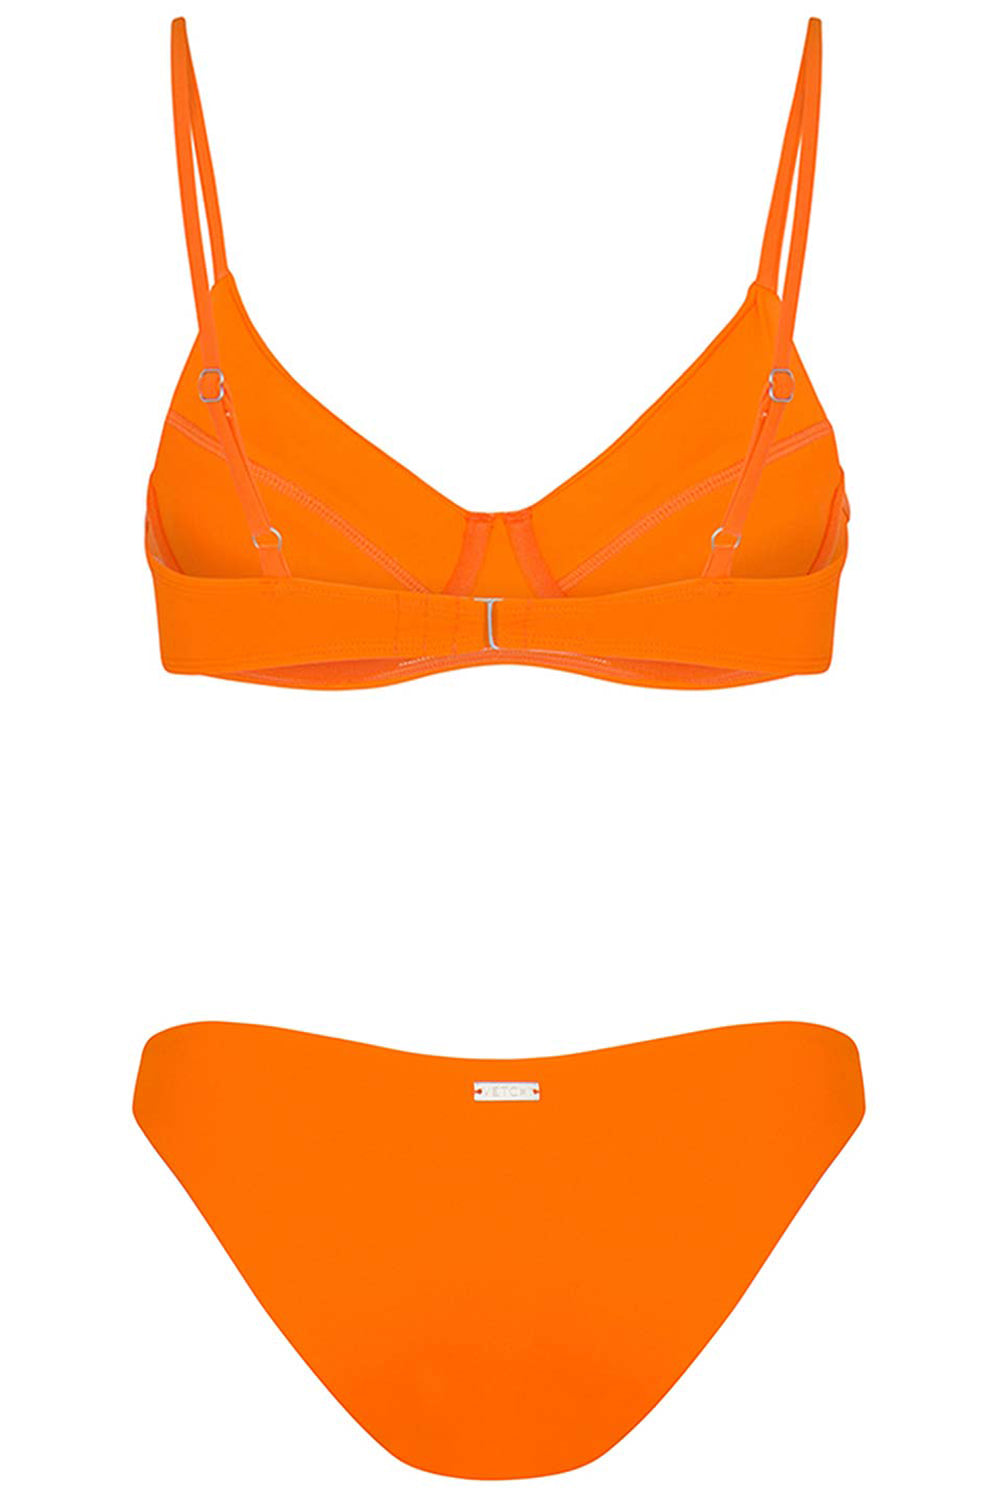 Destin Bikini Orange Set on white background back view.